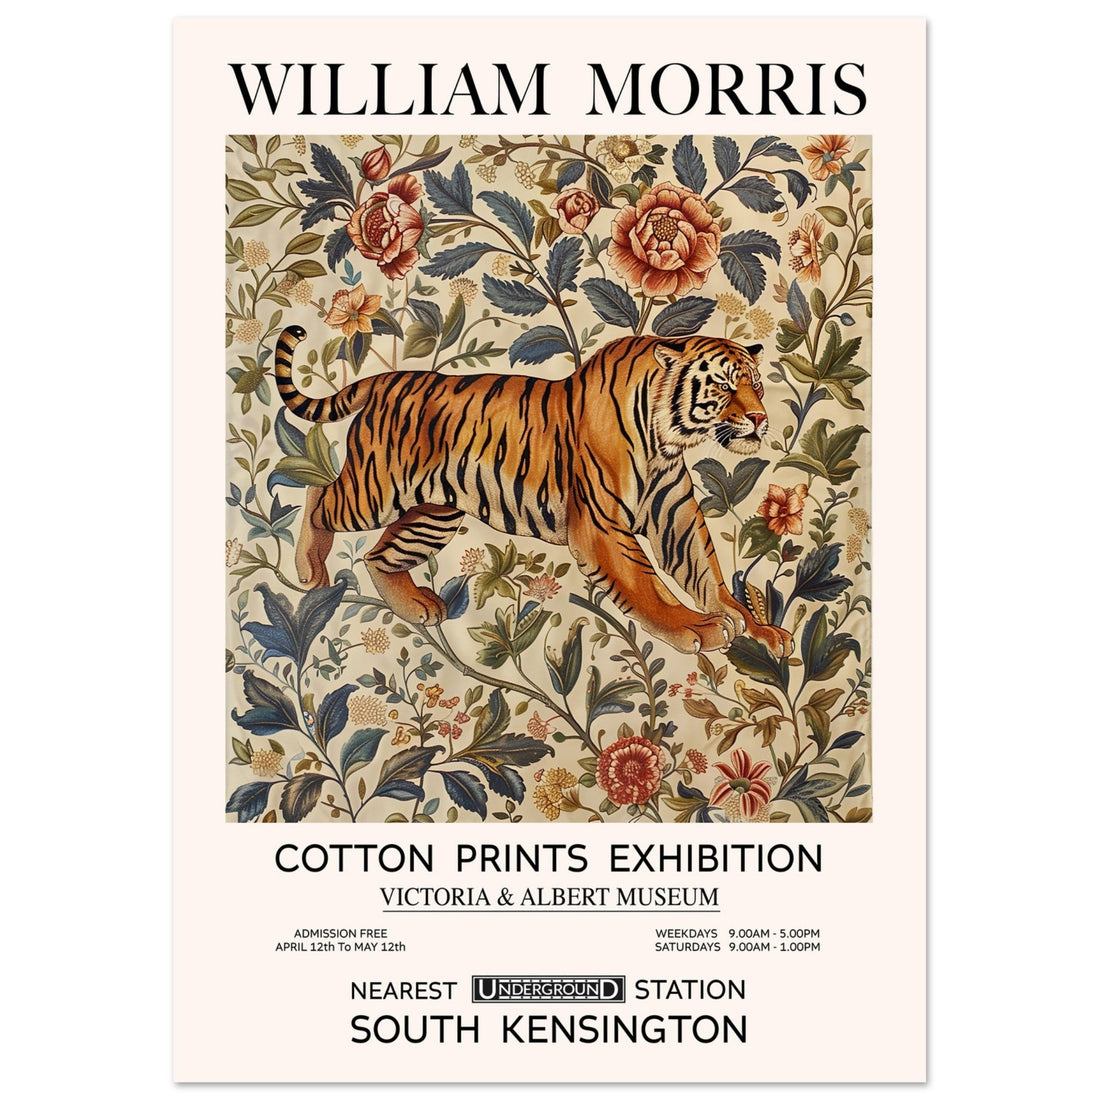 The Tiger - William Morris, ART NOUVEAU MORRIS, The Tiger, William Morris Art, #illieeart